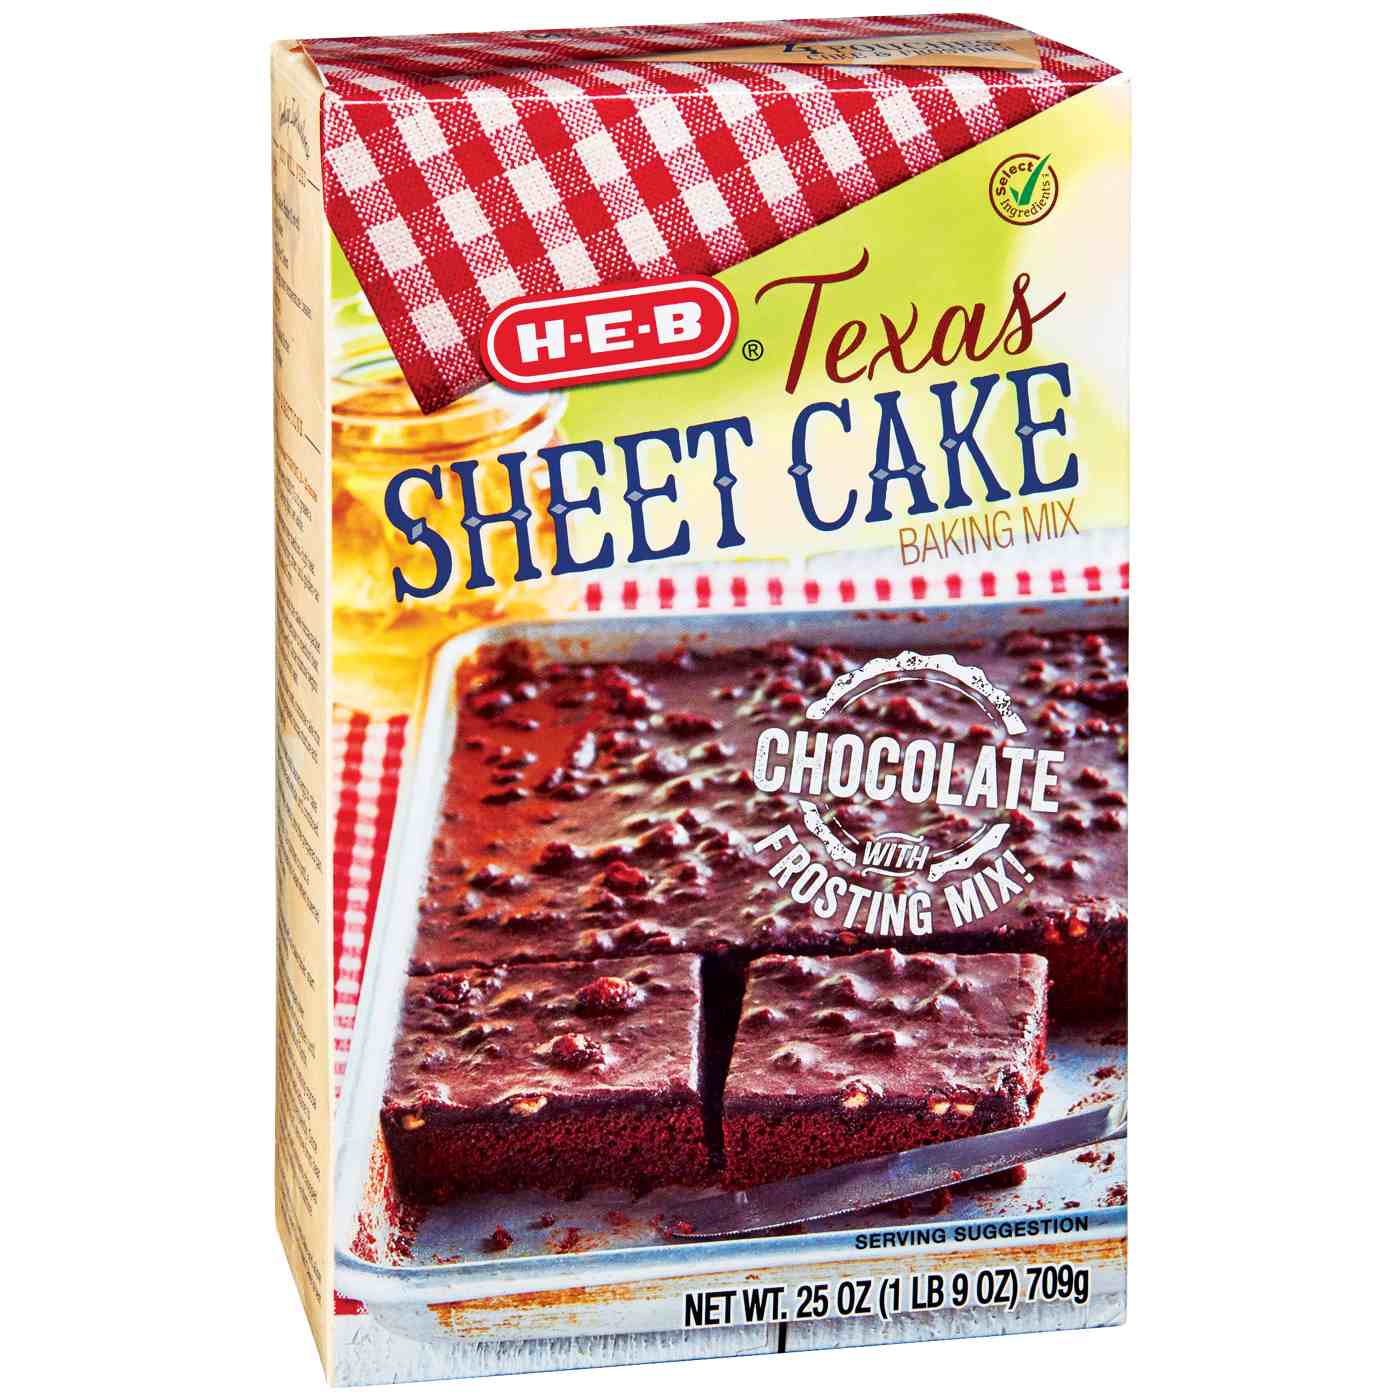 H-E-B Texas Sheet Cake & Frosting Chocolate Baking Mix; image 1 of 2